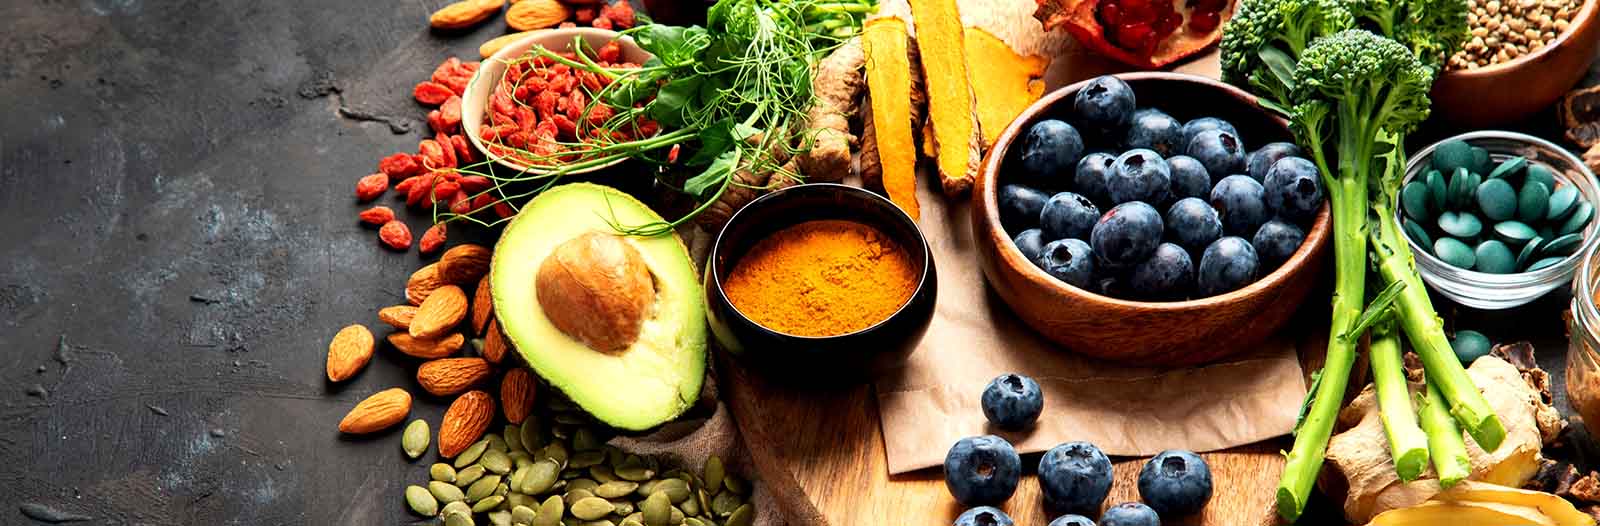 healthy foods on countertop